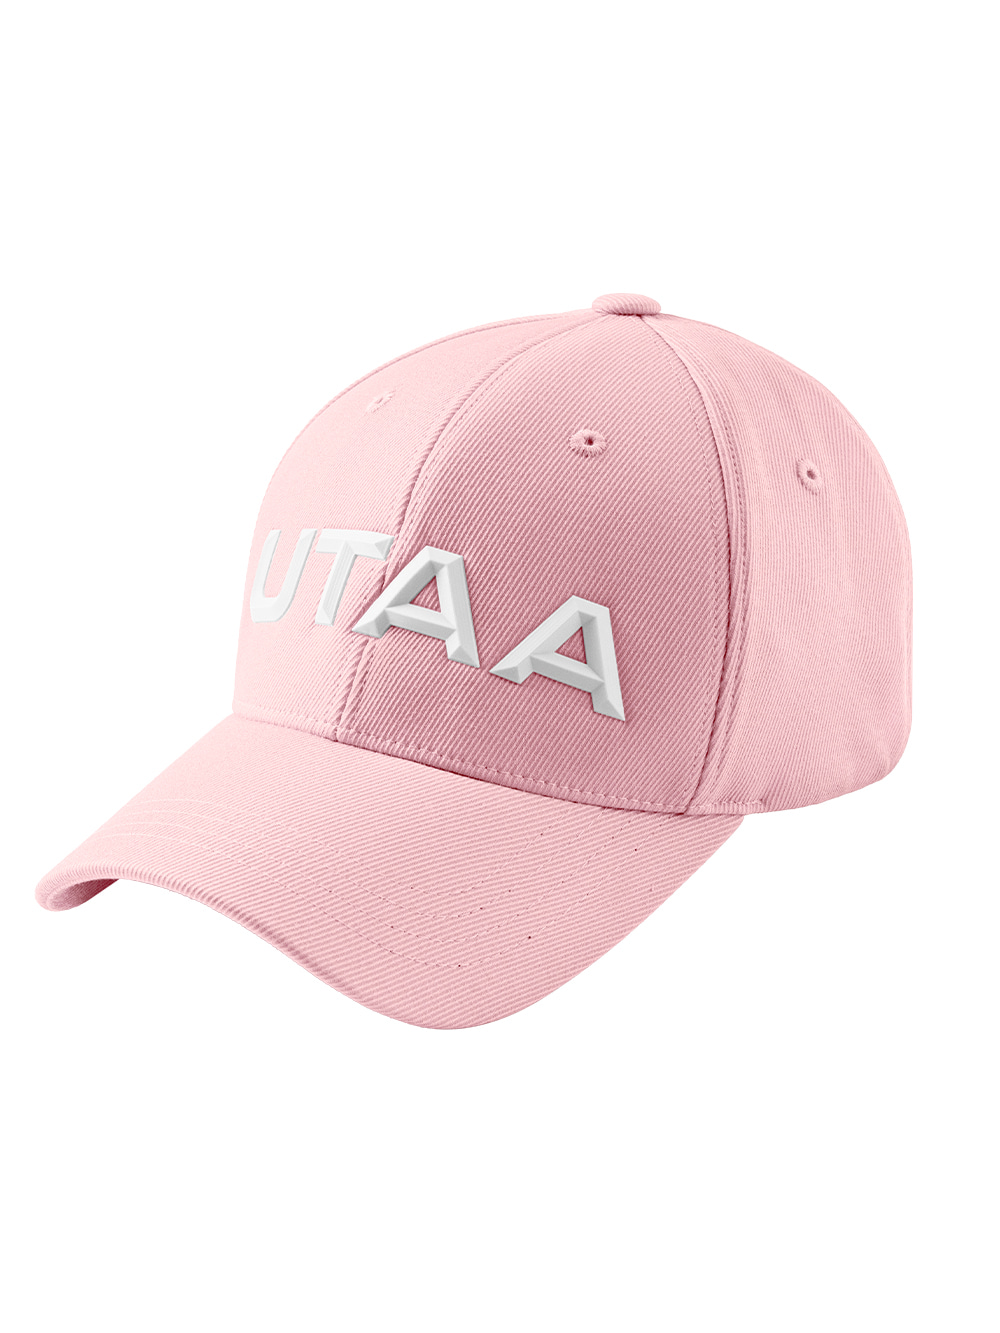 UTAA Figure Basic Cap : Pink White  (UA0GCU100LP)